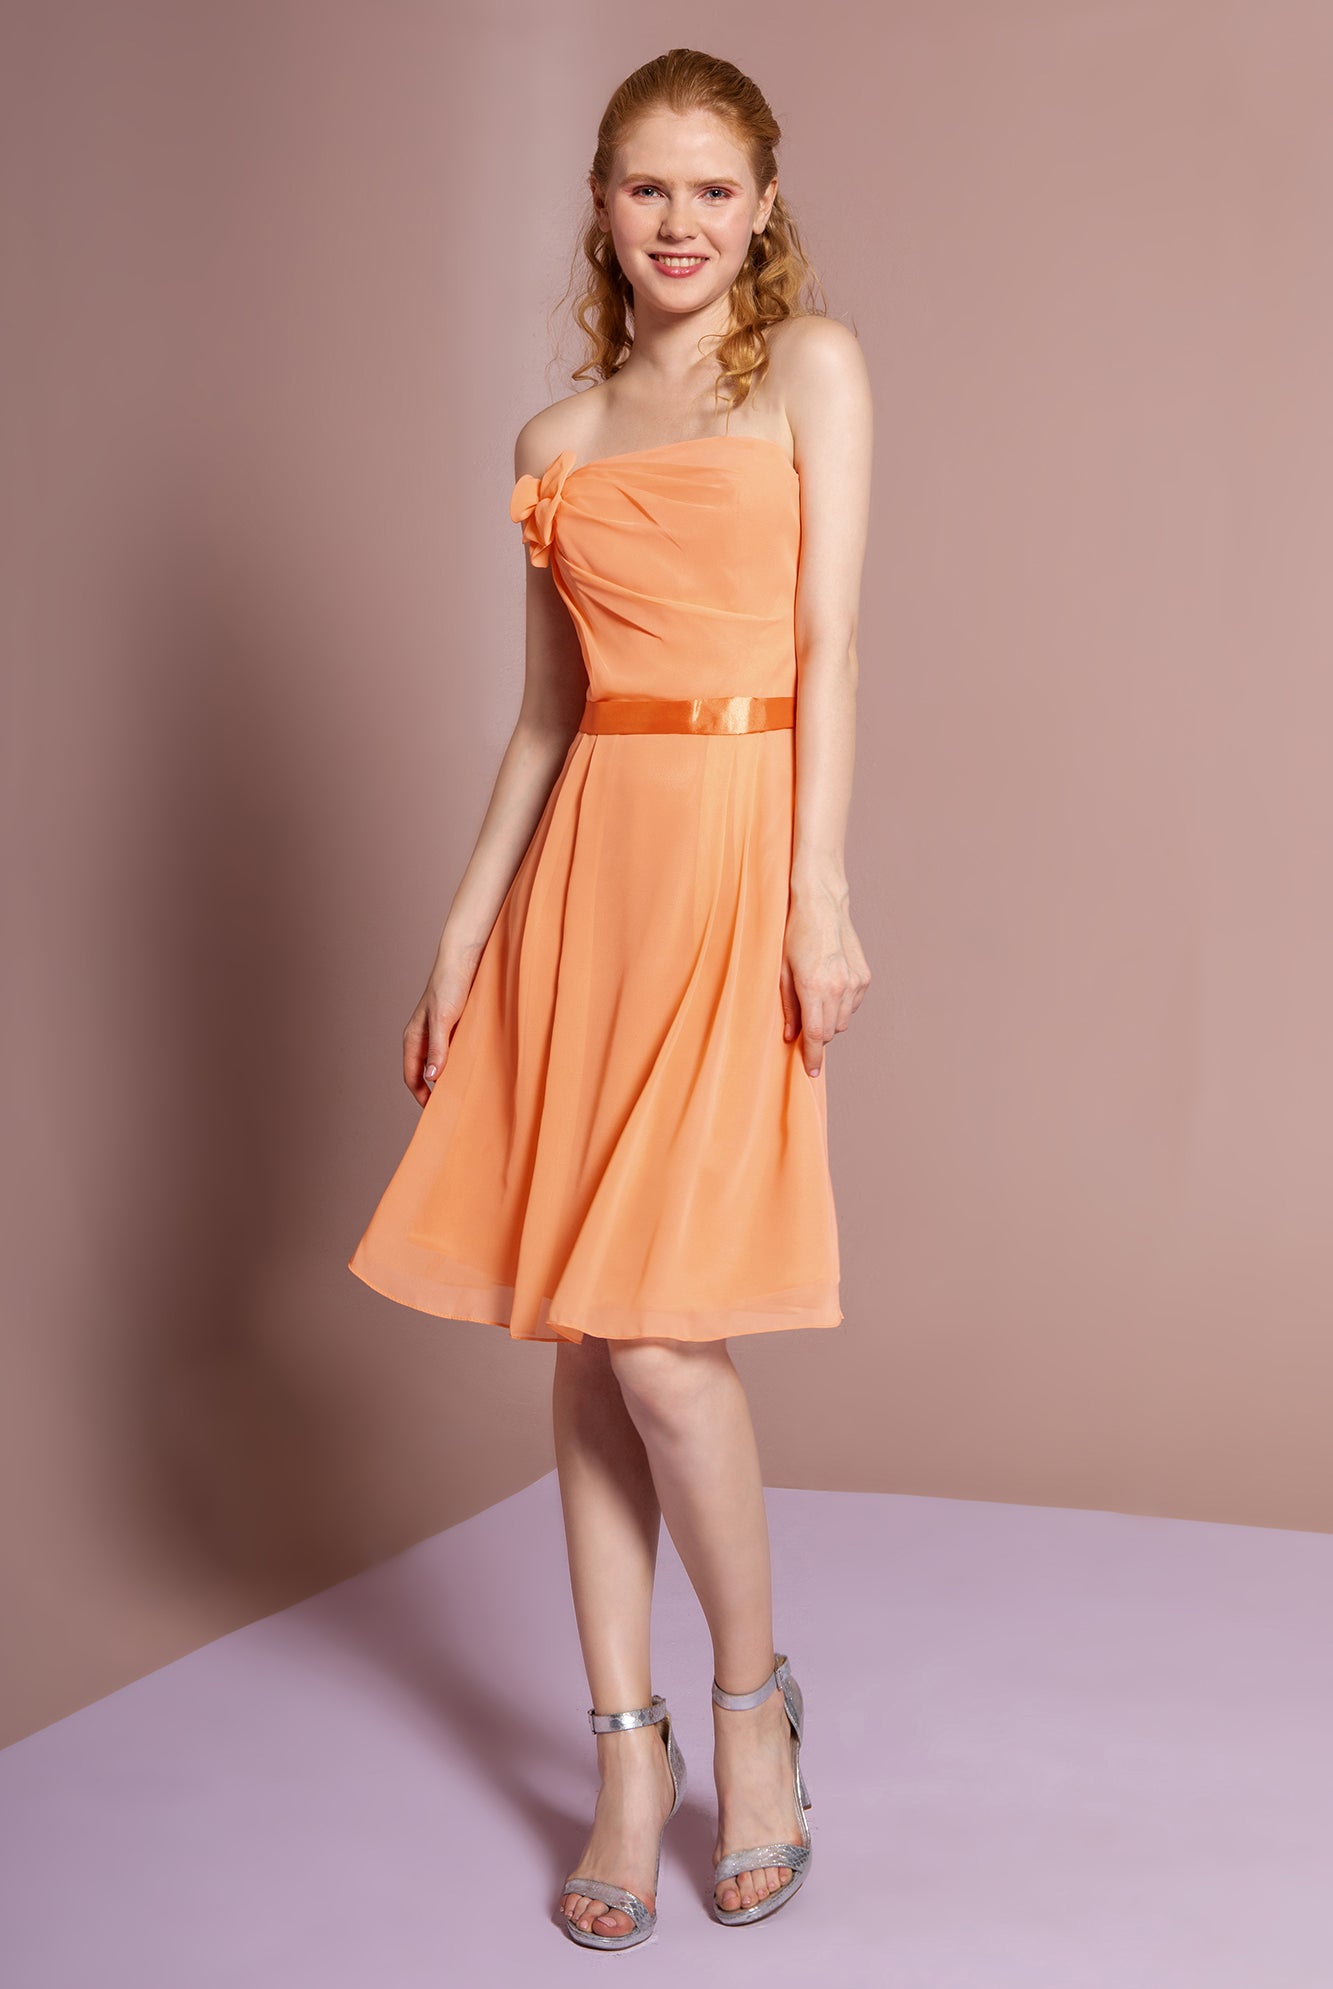 Strapless Chiffon Short Dress with Satin Waistband-smcdress